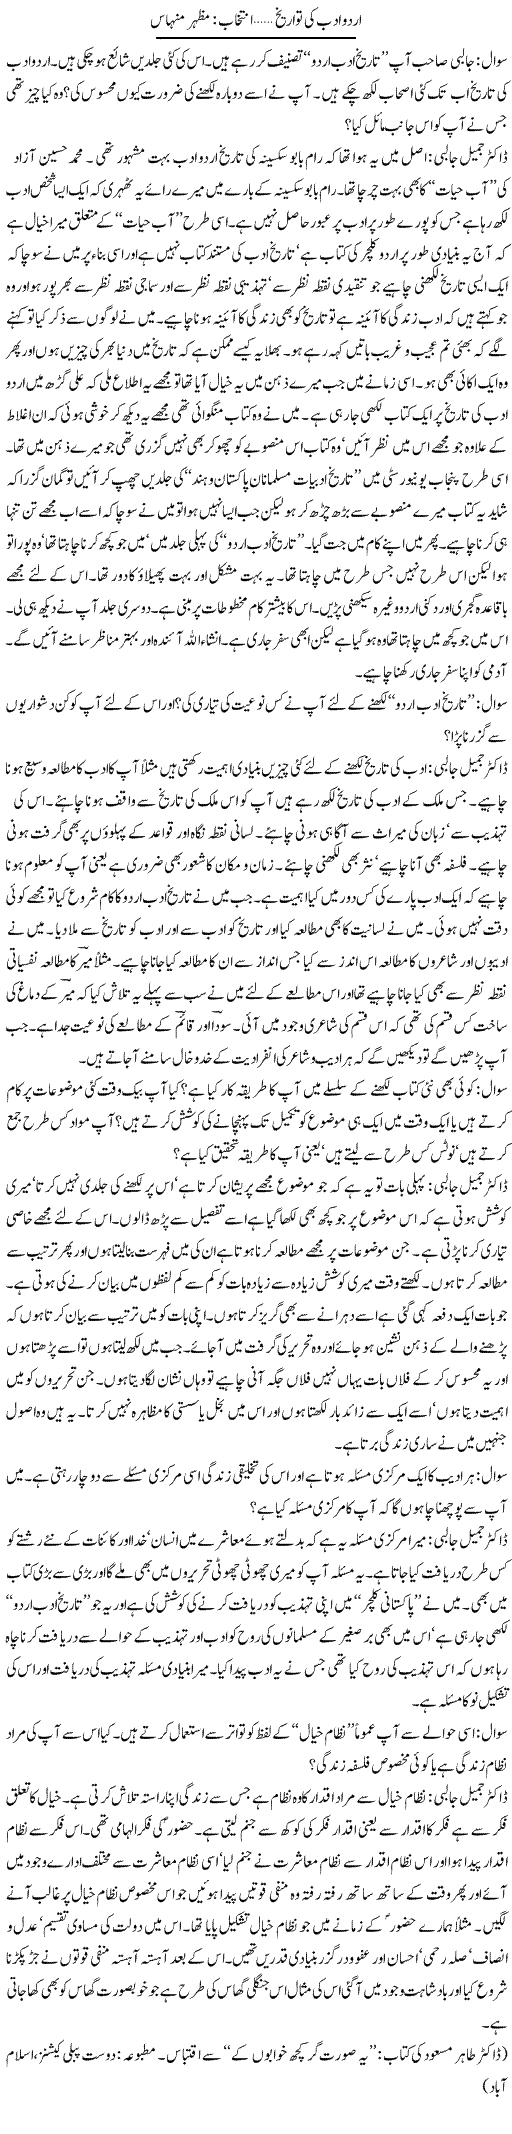 Urdu Adab Ki Tawareekh | Mazhar Minhas | Daily Urdu Columns